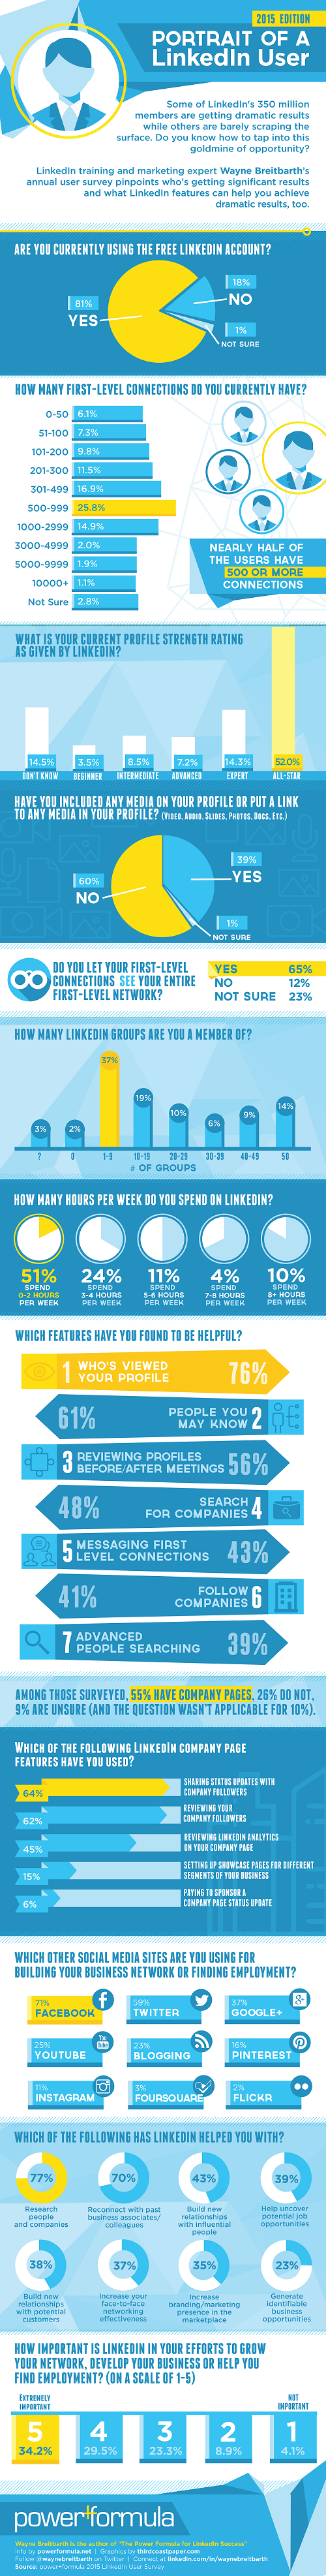 LinkedIn Infographic 2015